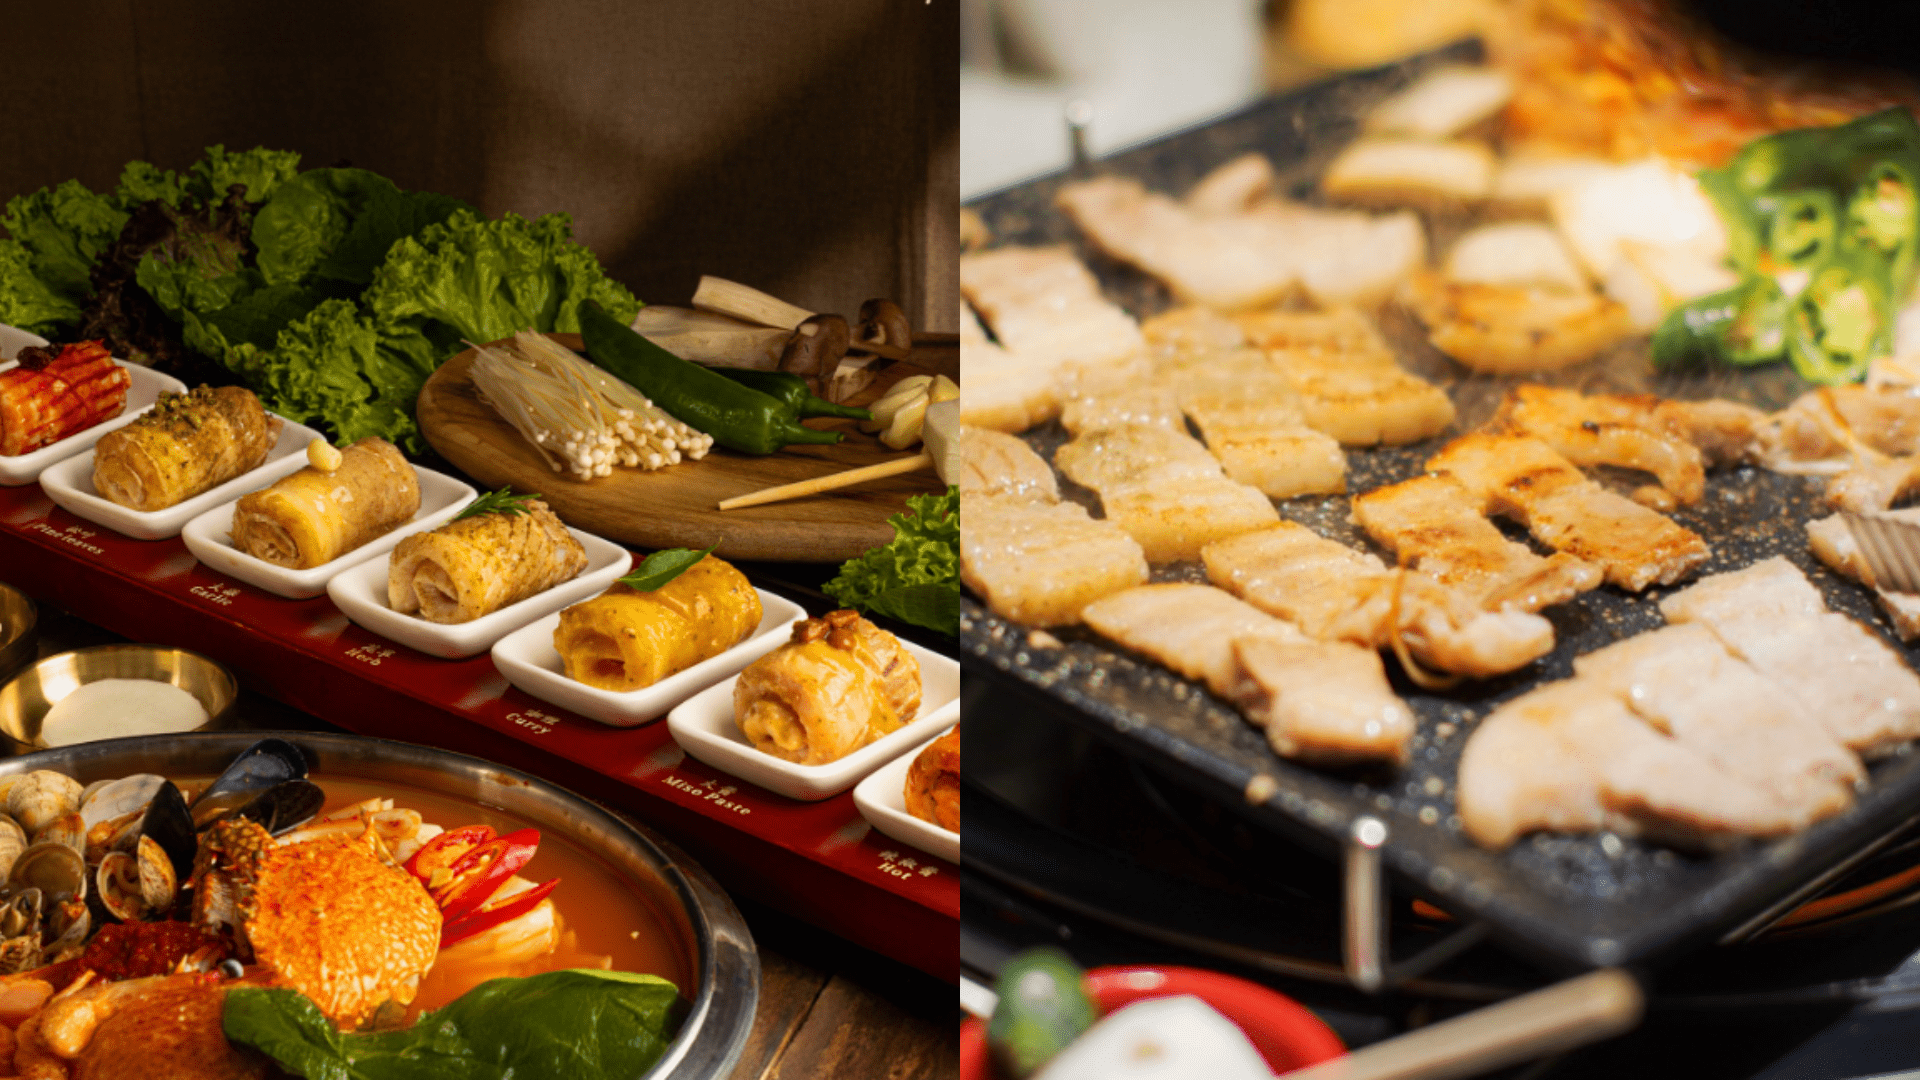 best Korean BBQ in Penang